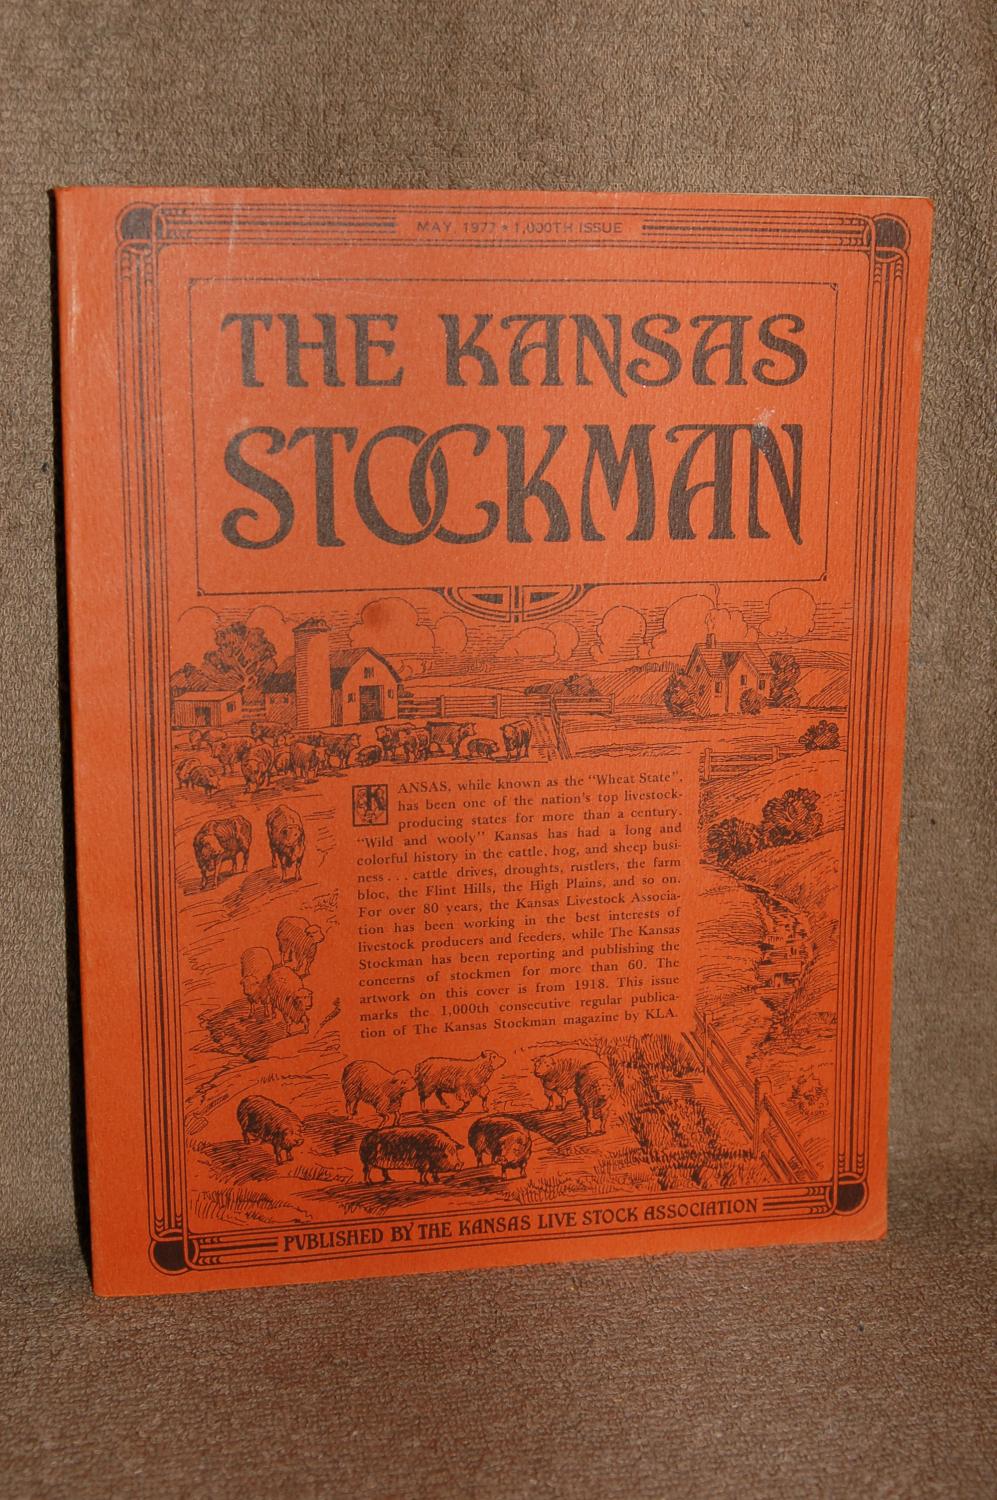 The Kansas Stockman; May 1977 (1,000th Issue) - Jack Vanier, President